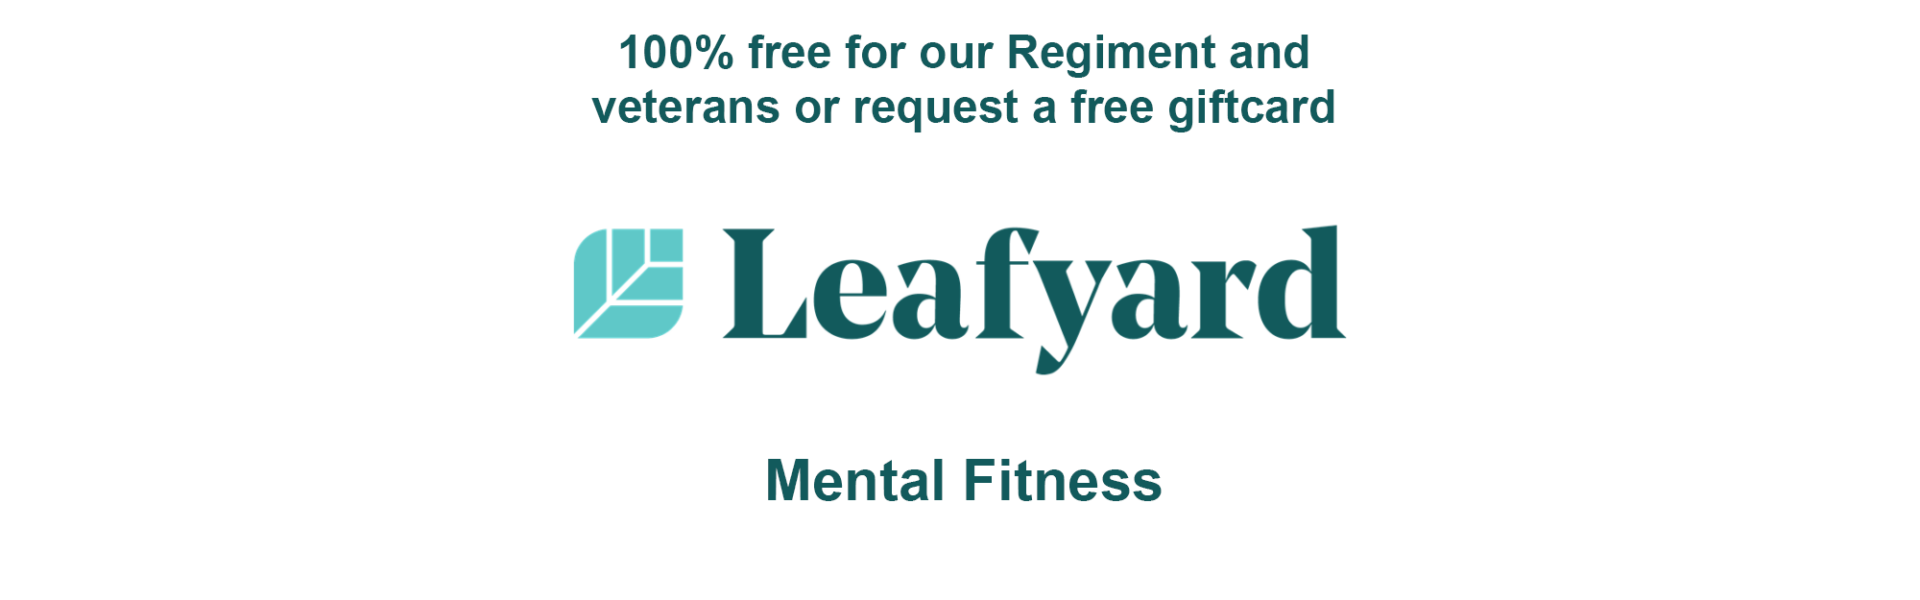 Leafyard mental fitness